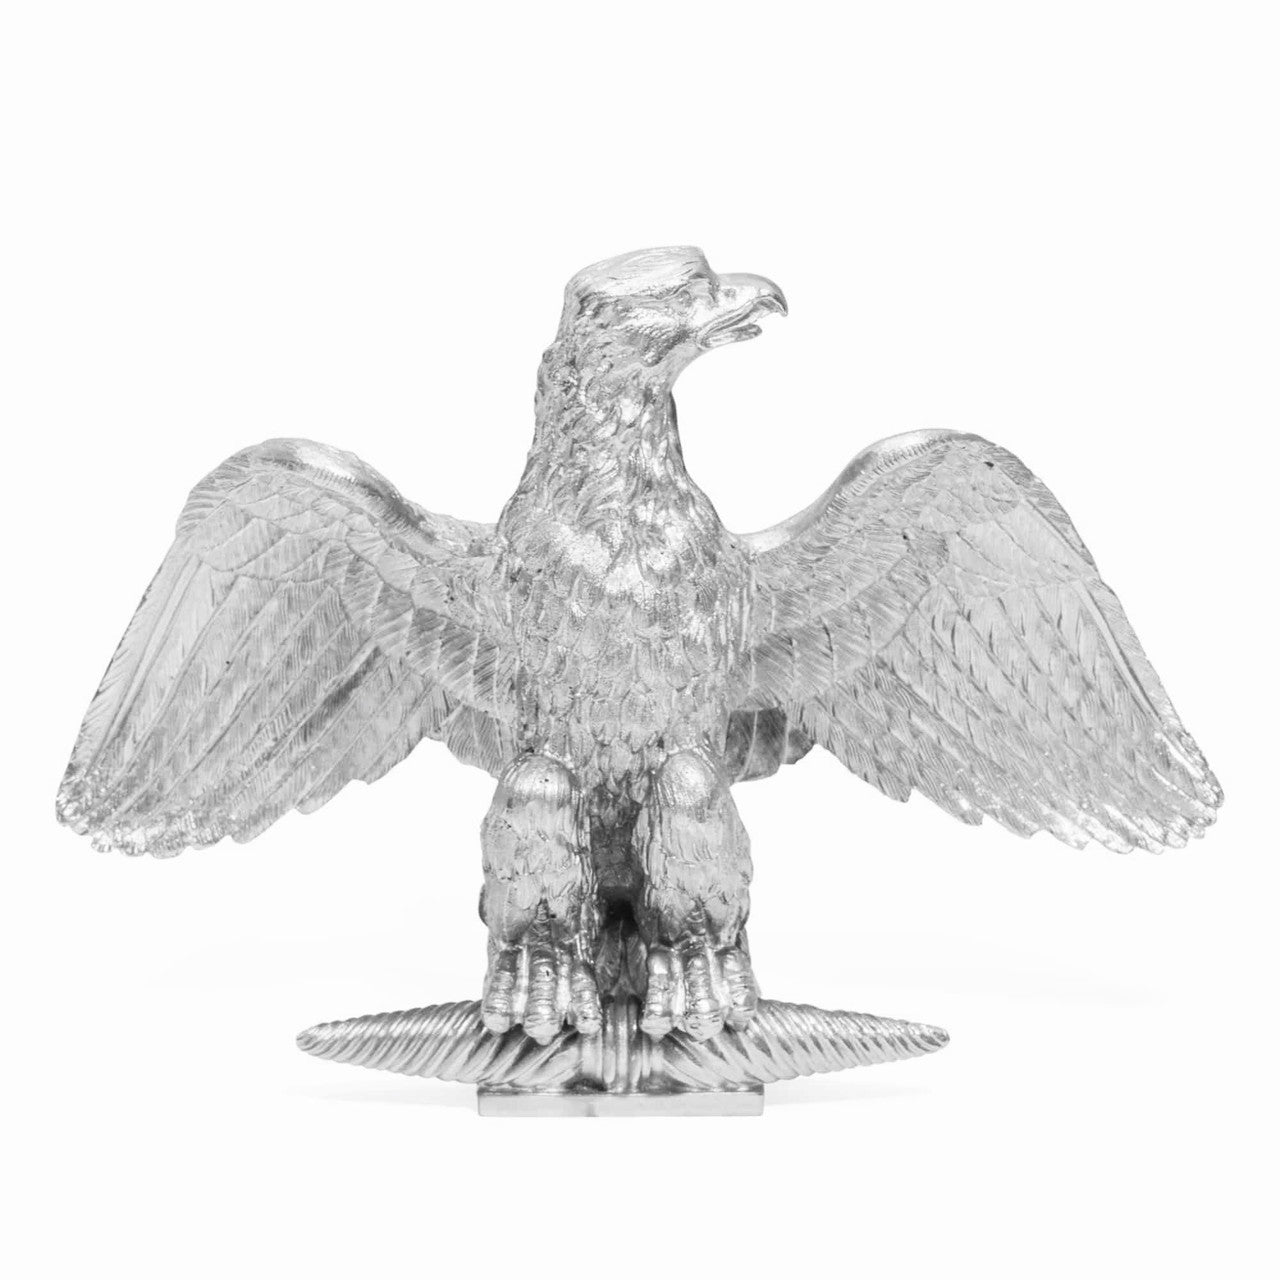 Imperial Eagle